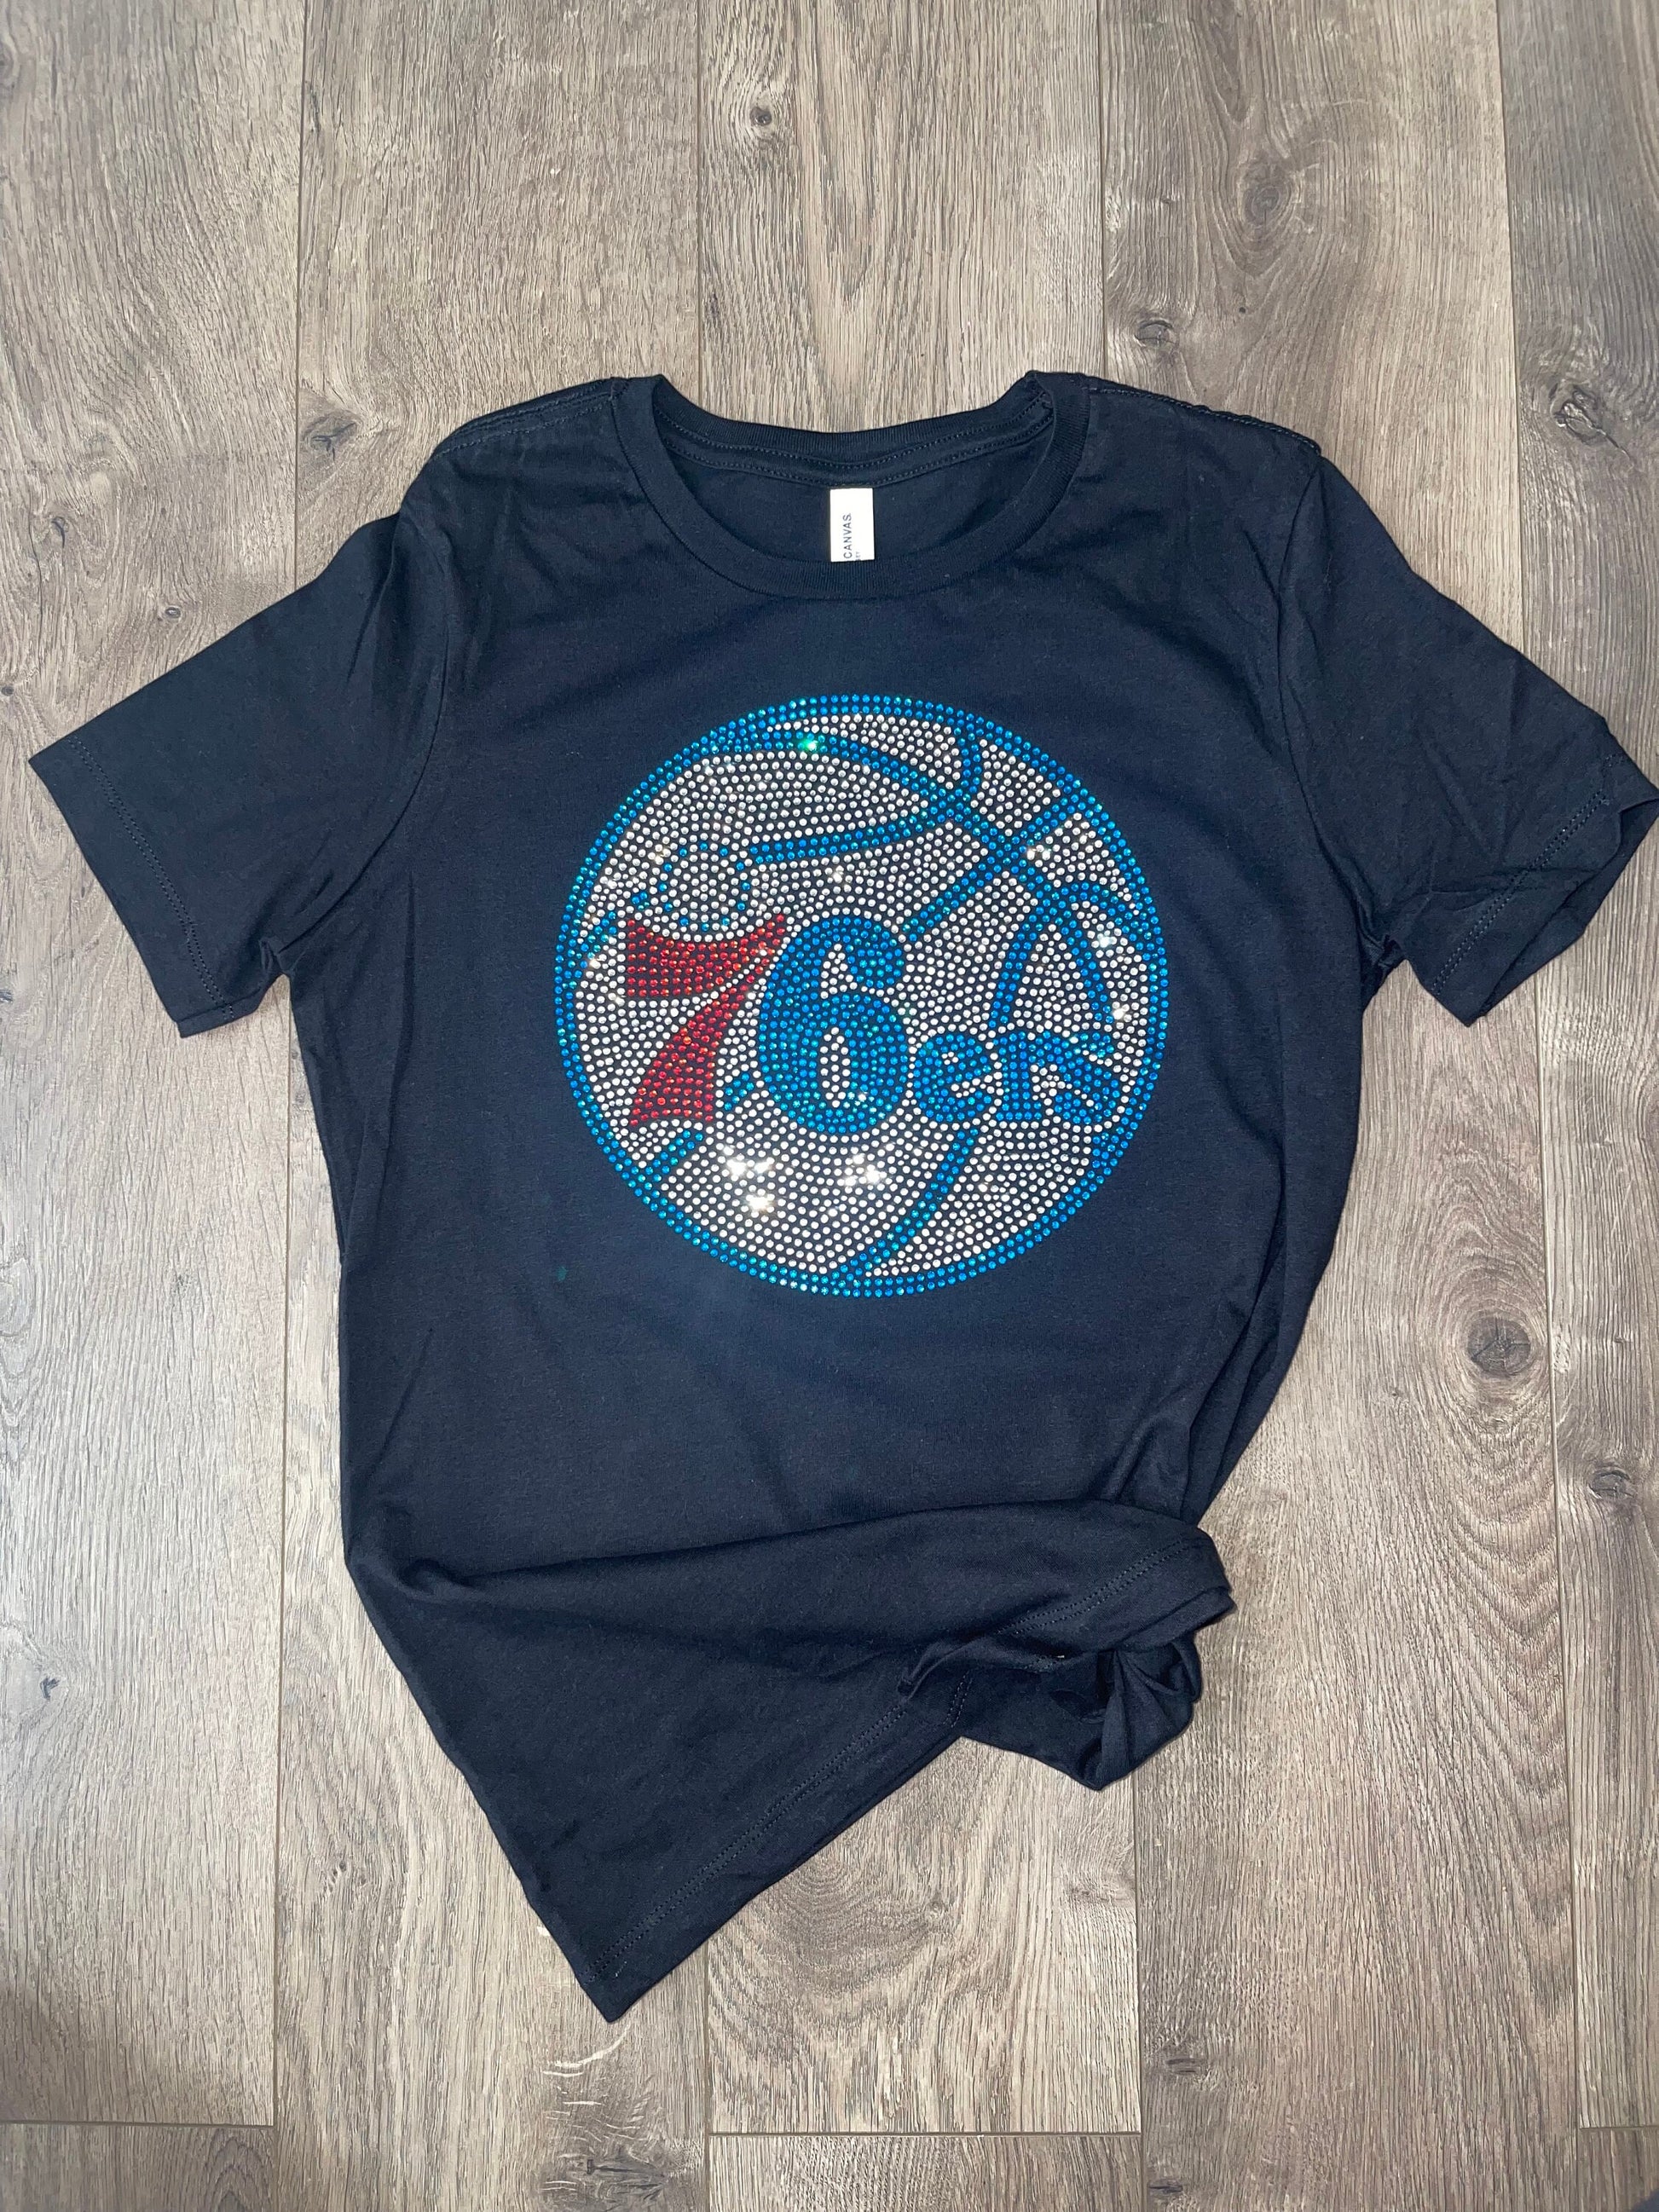 76ERs Rhinestone Shirt, Basketball Bling shirt